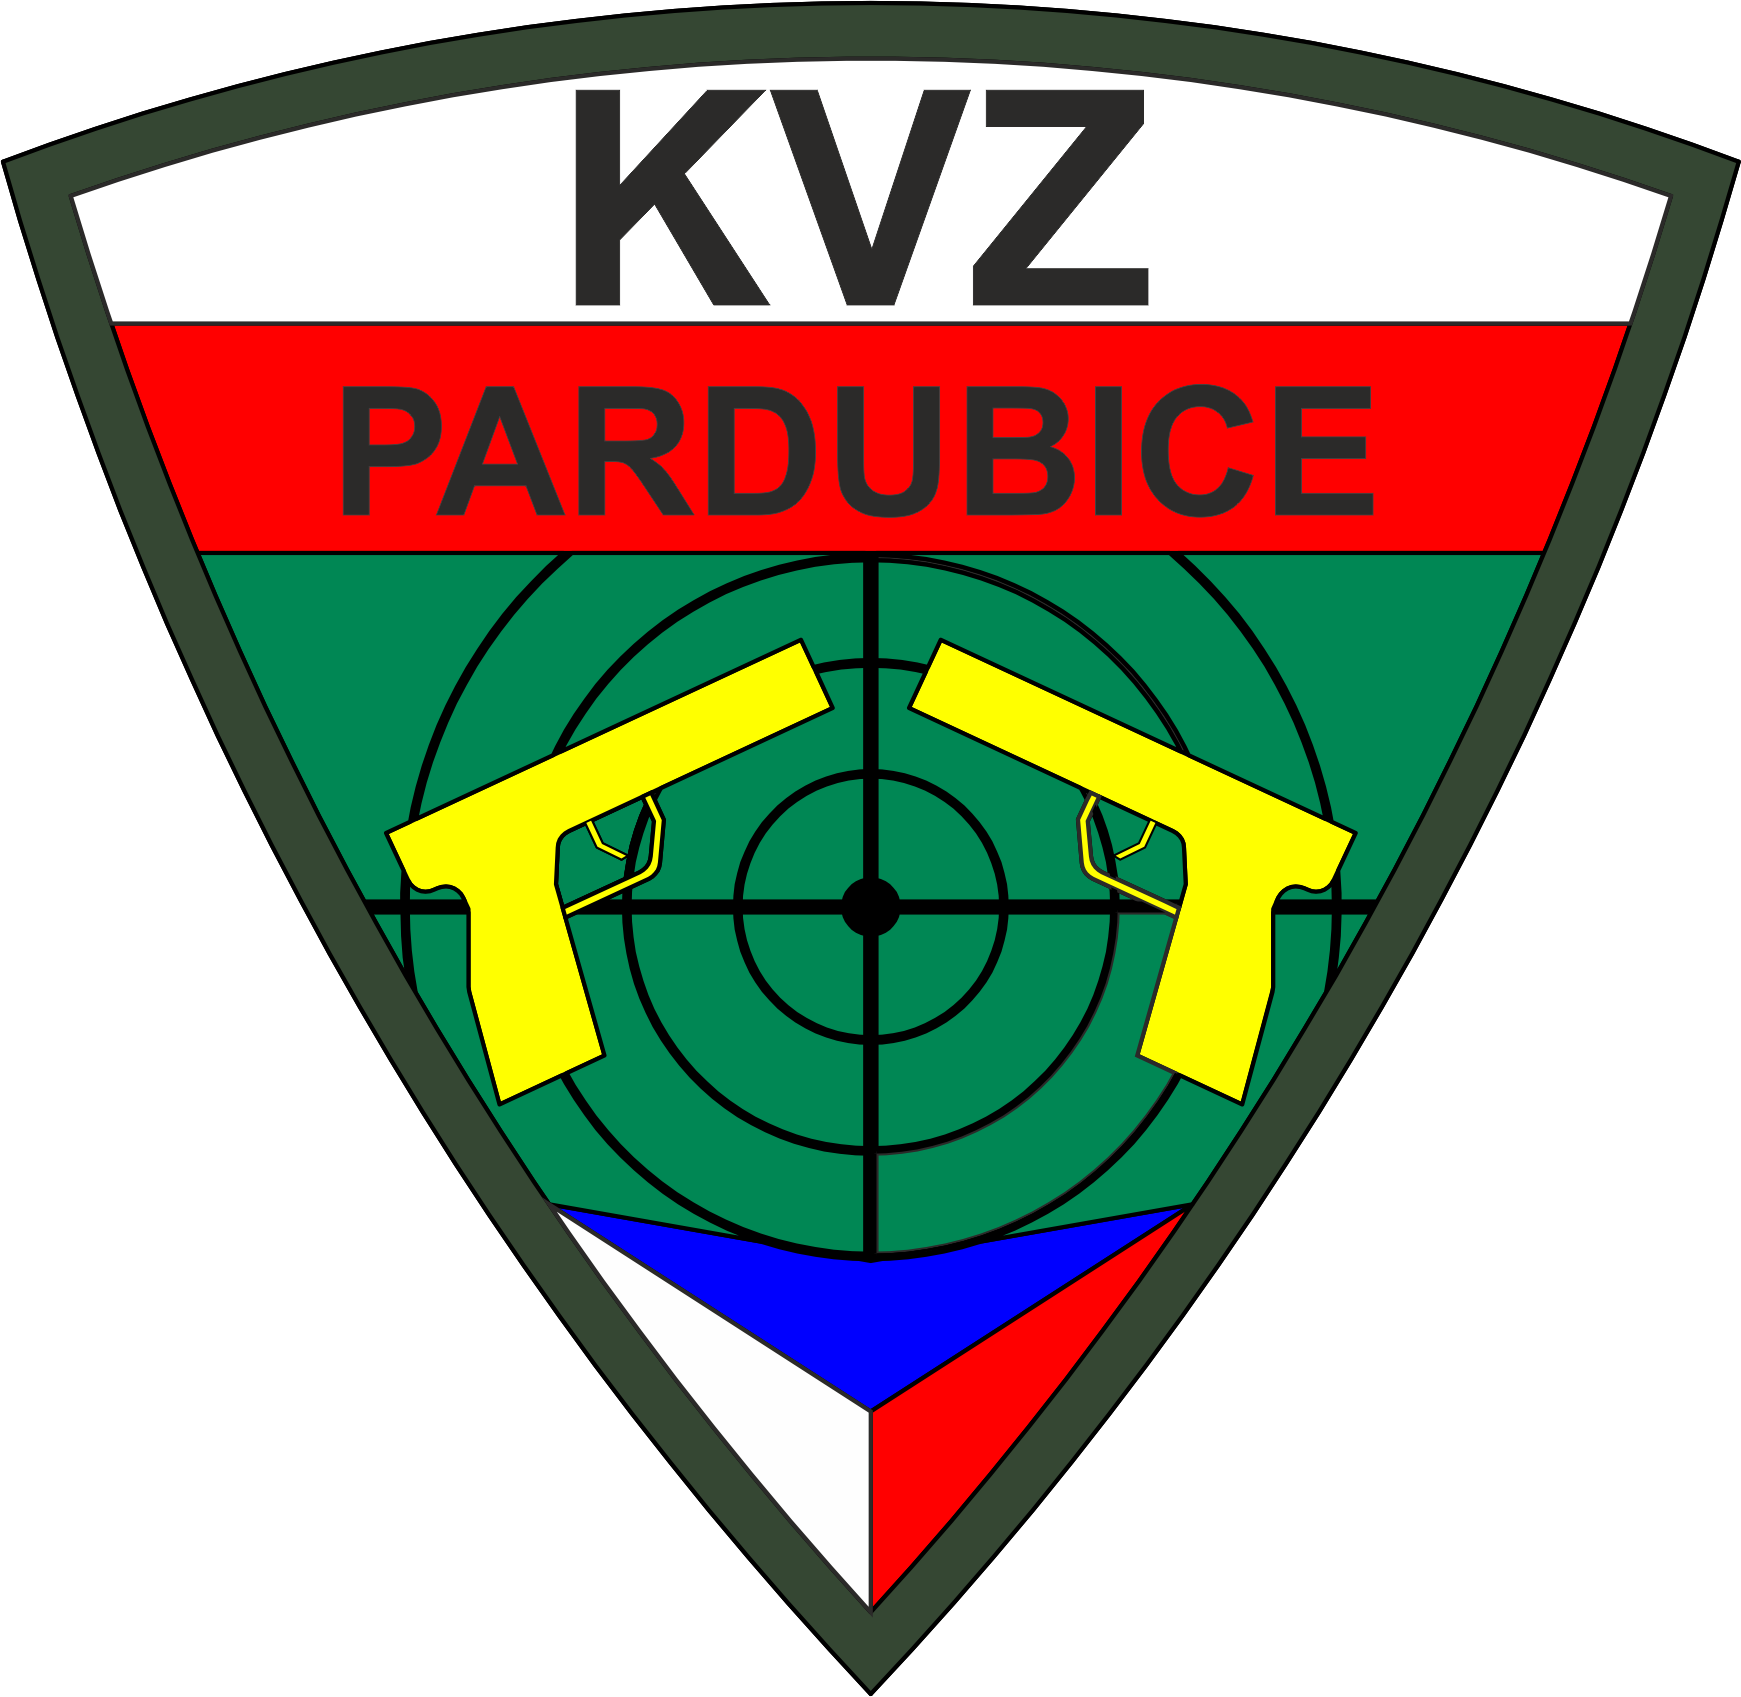 KVZPardubice